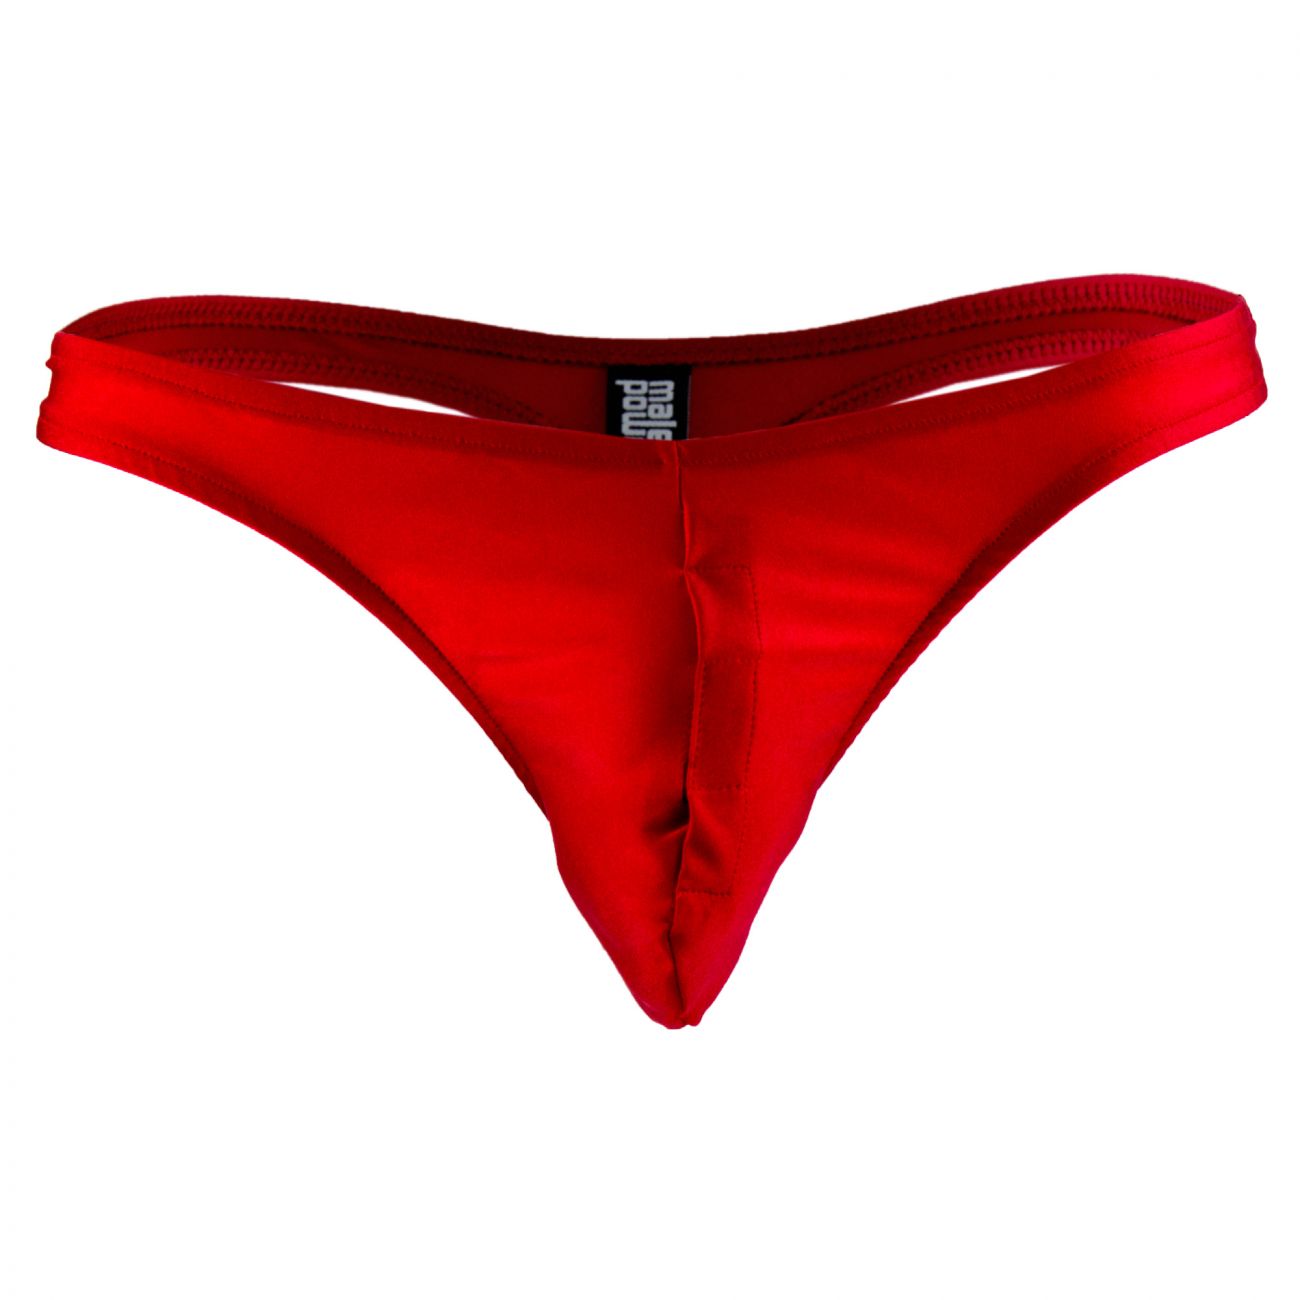 Mens Underwear: Male Power PAK834 Pull Tab Thong | eBay